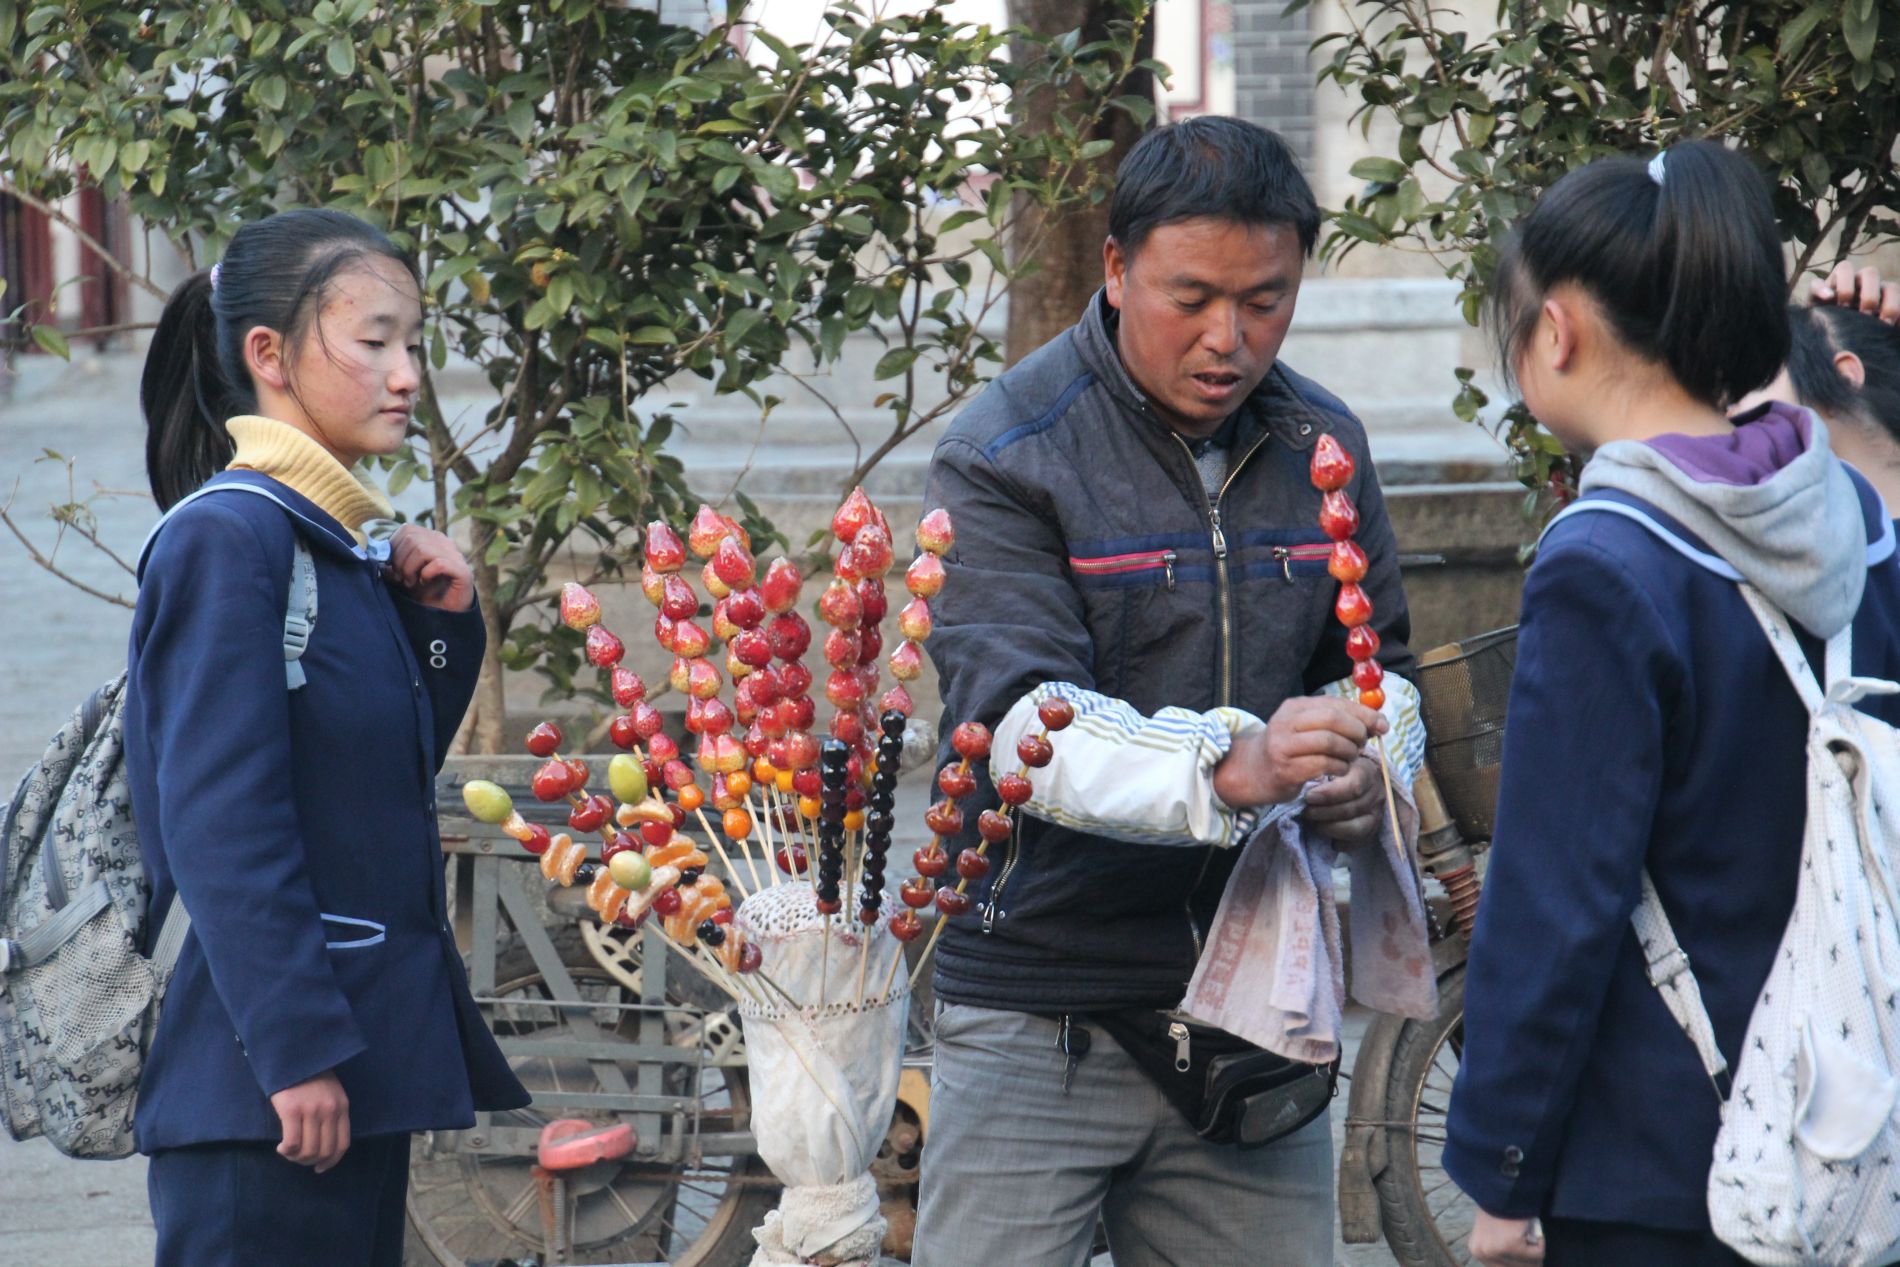 A man sells sugar-covered strawberries in DàlÇ?, China.